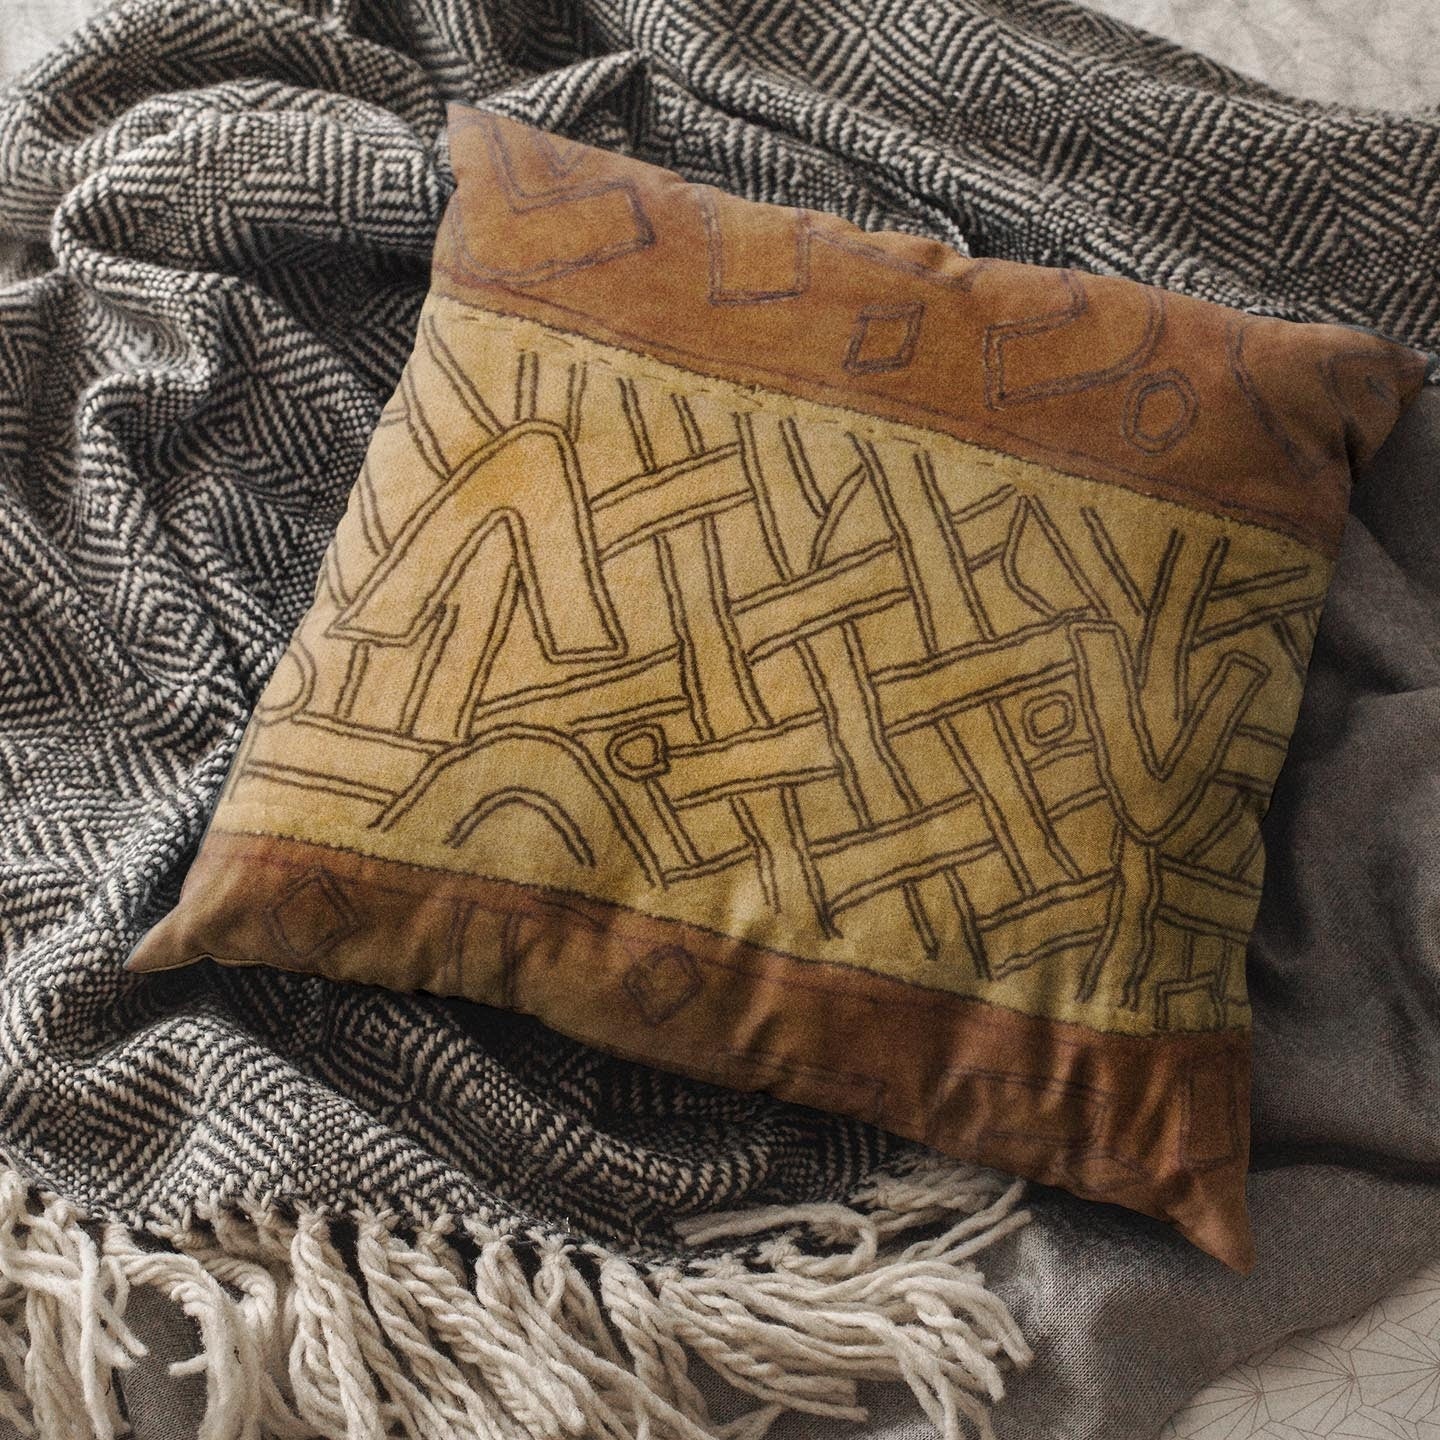 Tribal Pillow Kuba-Cloth Inspired Tribal African Pillows Kilim Afrocentric Pillow Kente Mudcloth Antique Vintage Throw Pillow